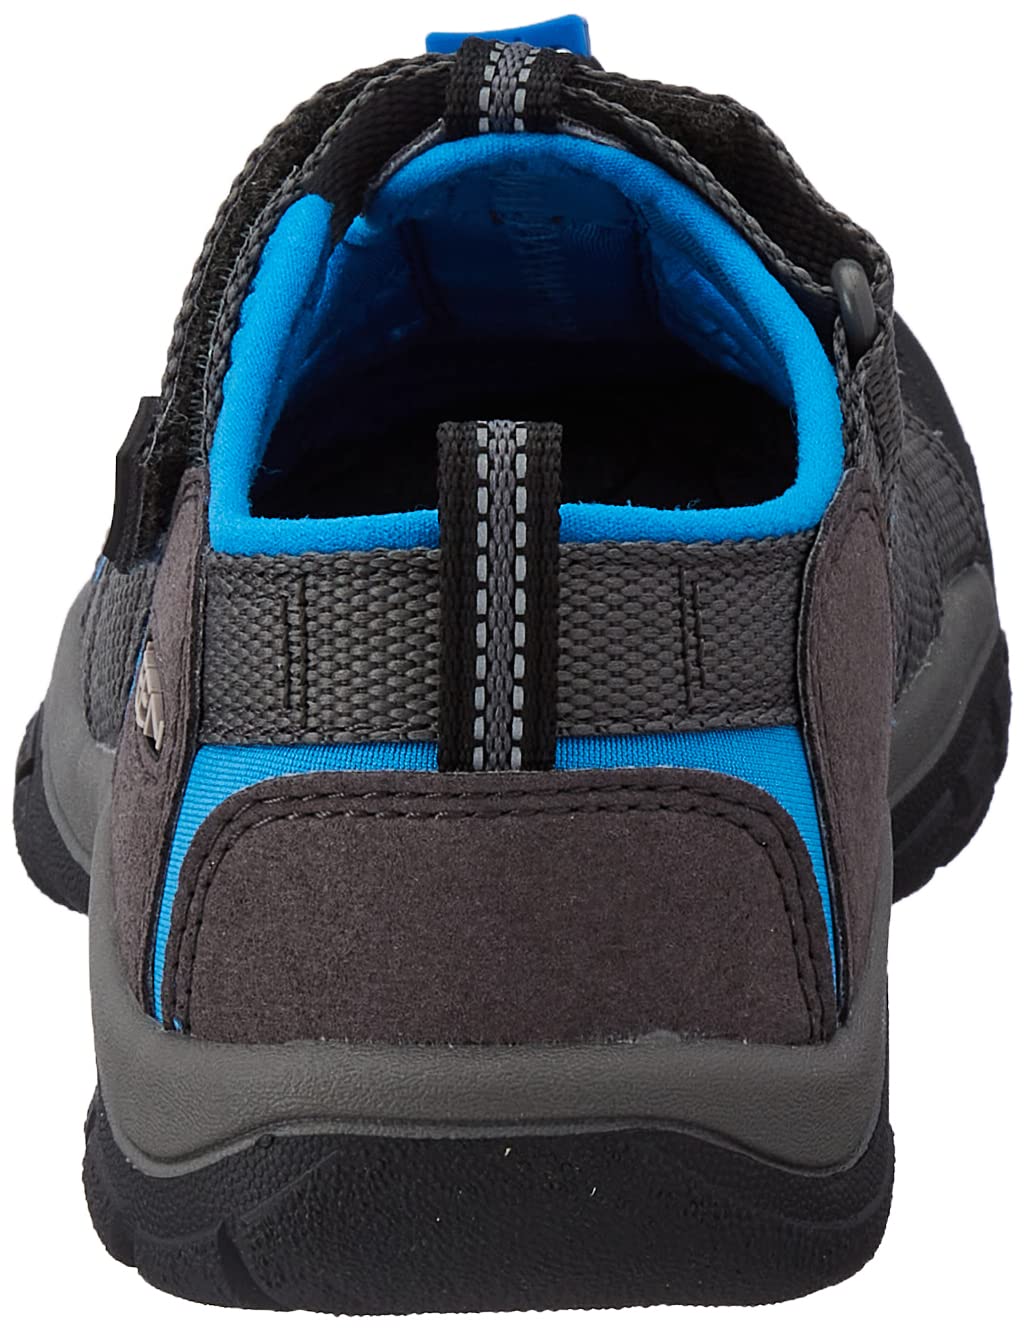 KEEN Unisex-Child Newport H2 Closed Toe Water Sandals, Magnet/Brilliant Blue, 11 Little Kid US